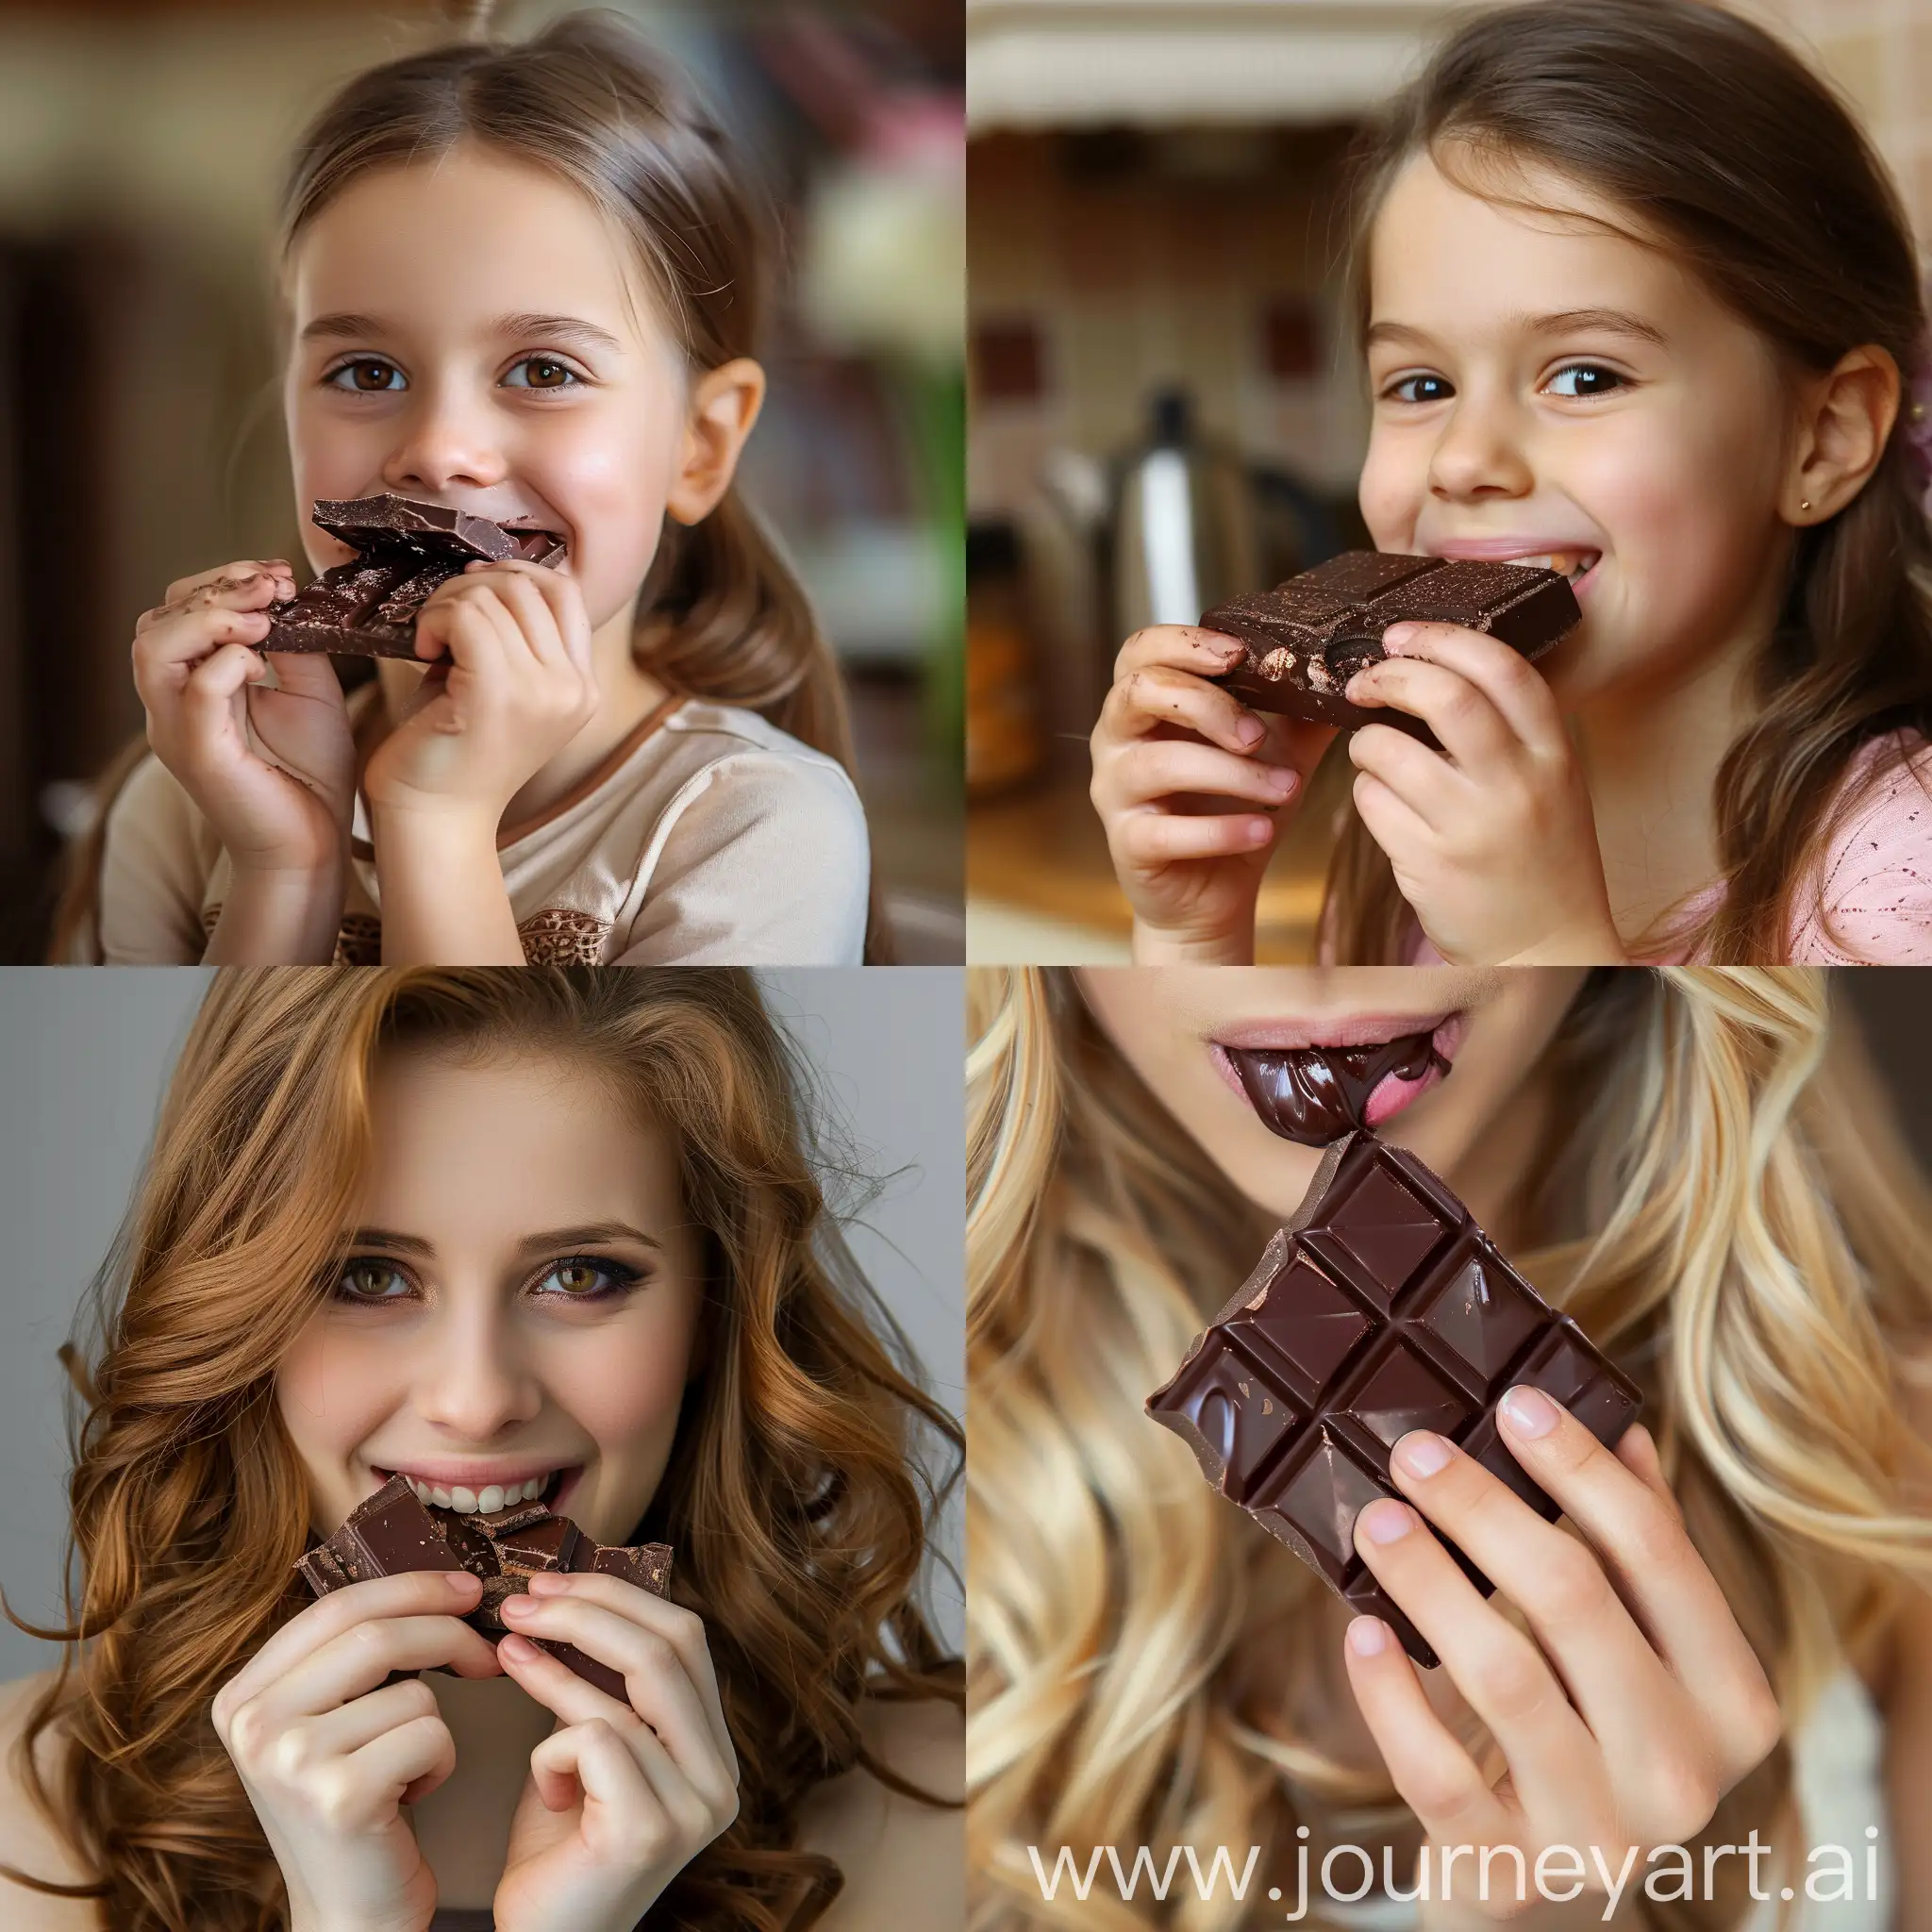 A girl eating chocolate 